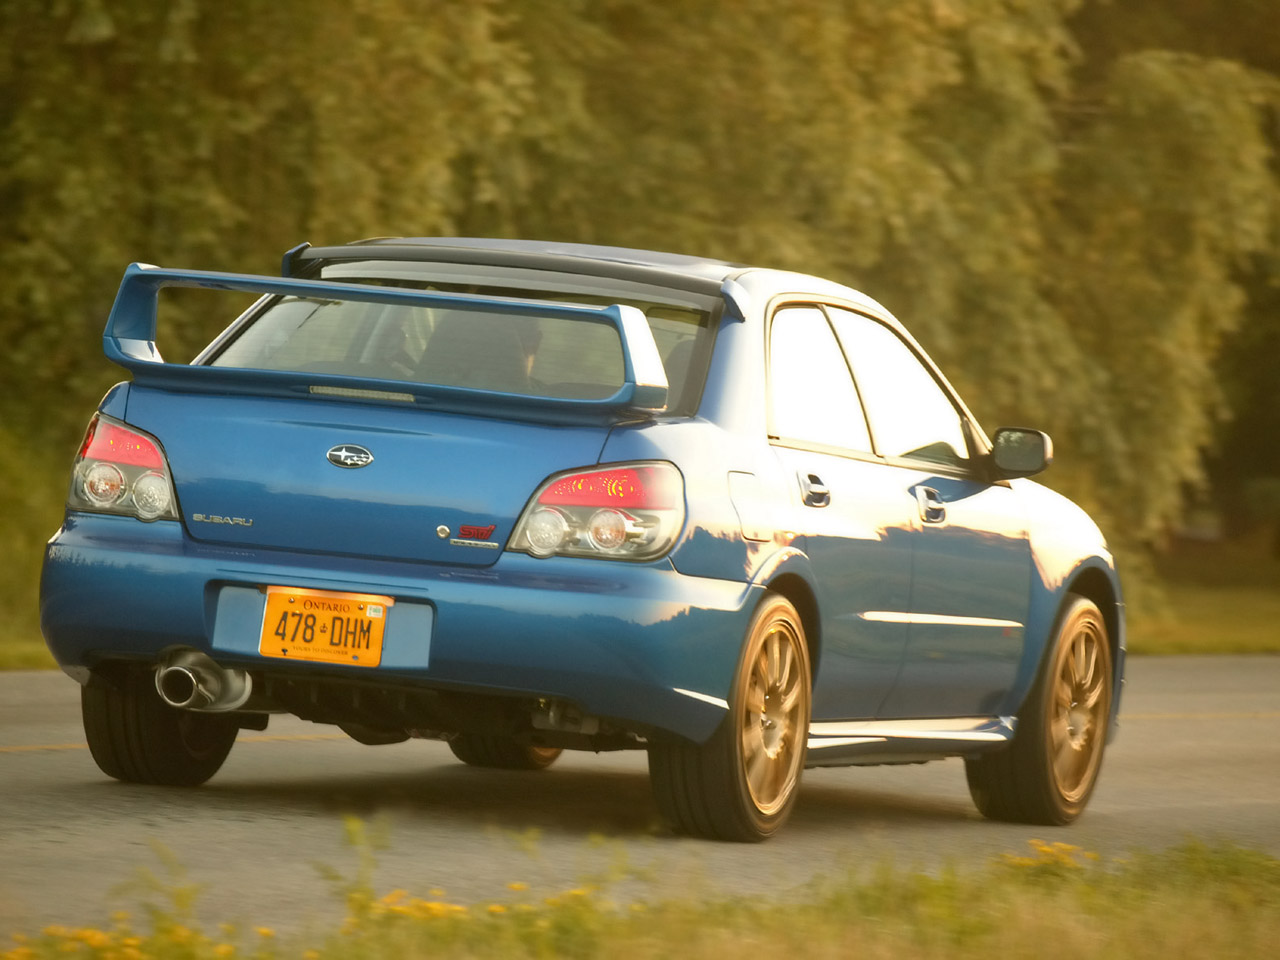 2006 Subaru Impreza WRX STI